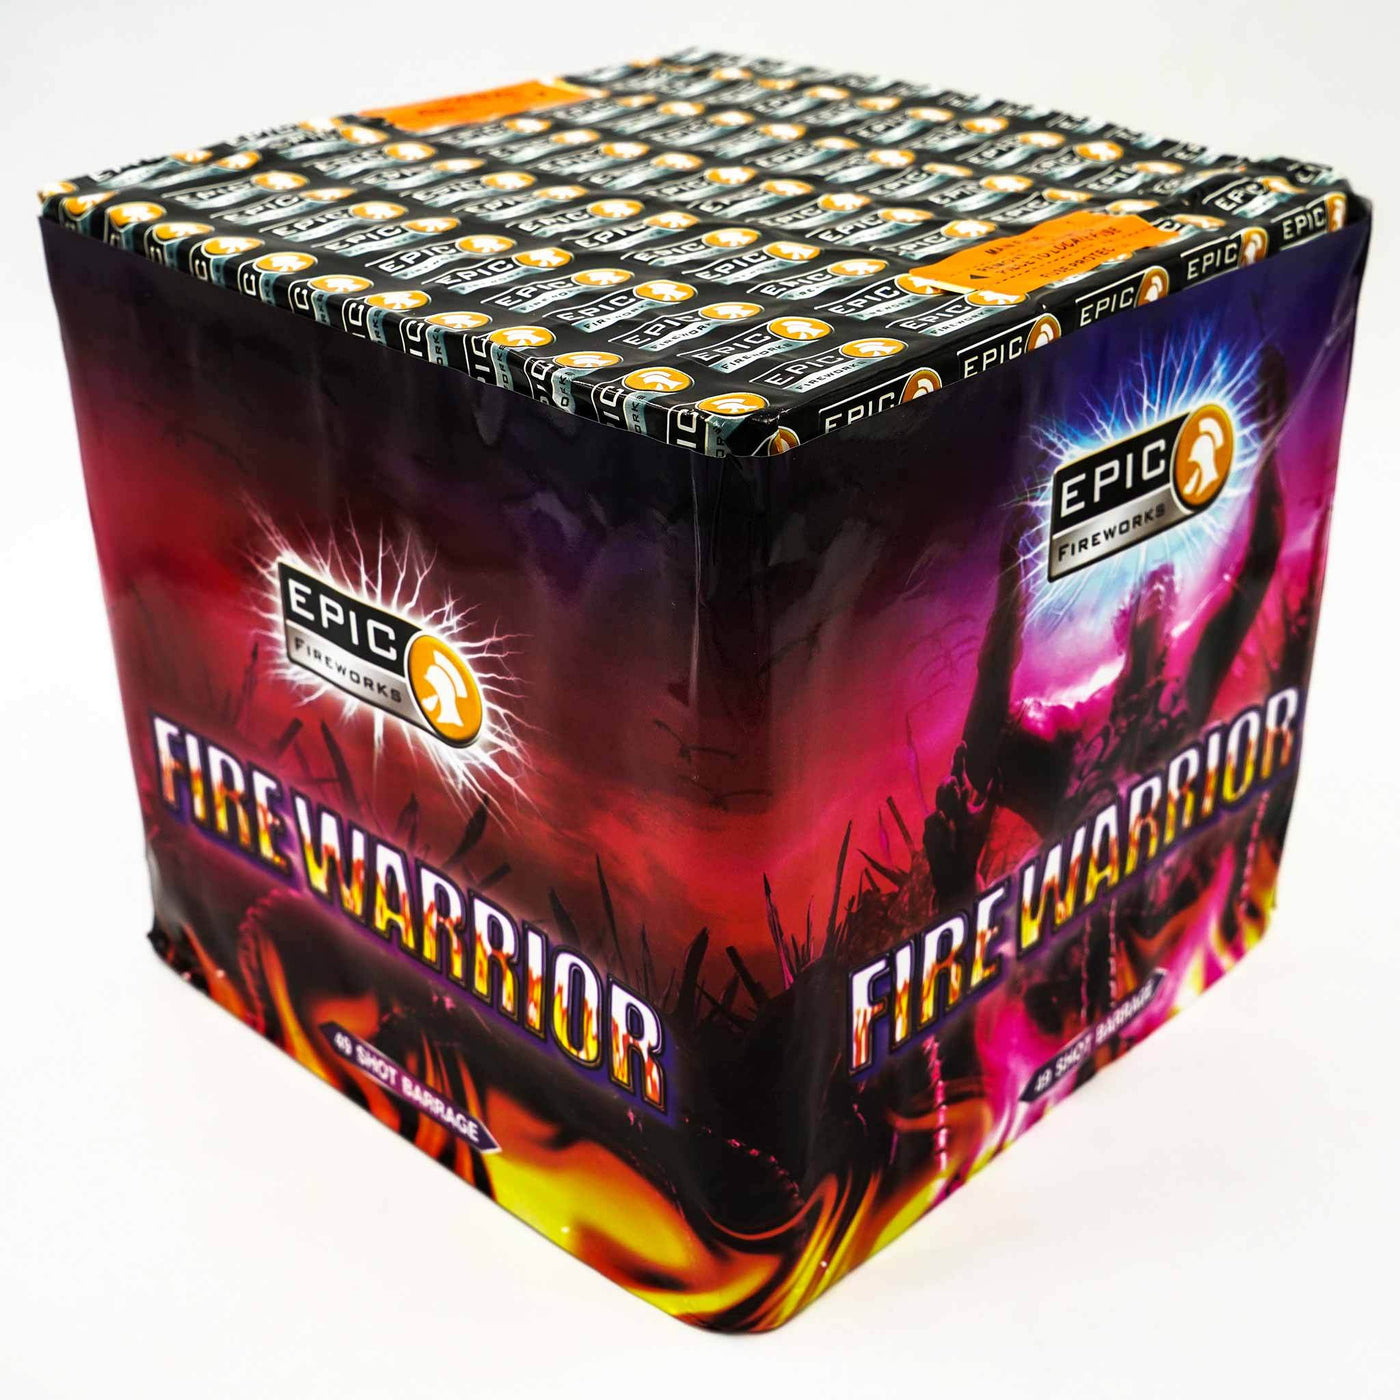 Fire Warrior 49 Shots Firework 1.3G Barrage by Epic Fireworks